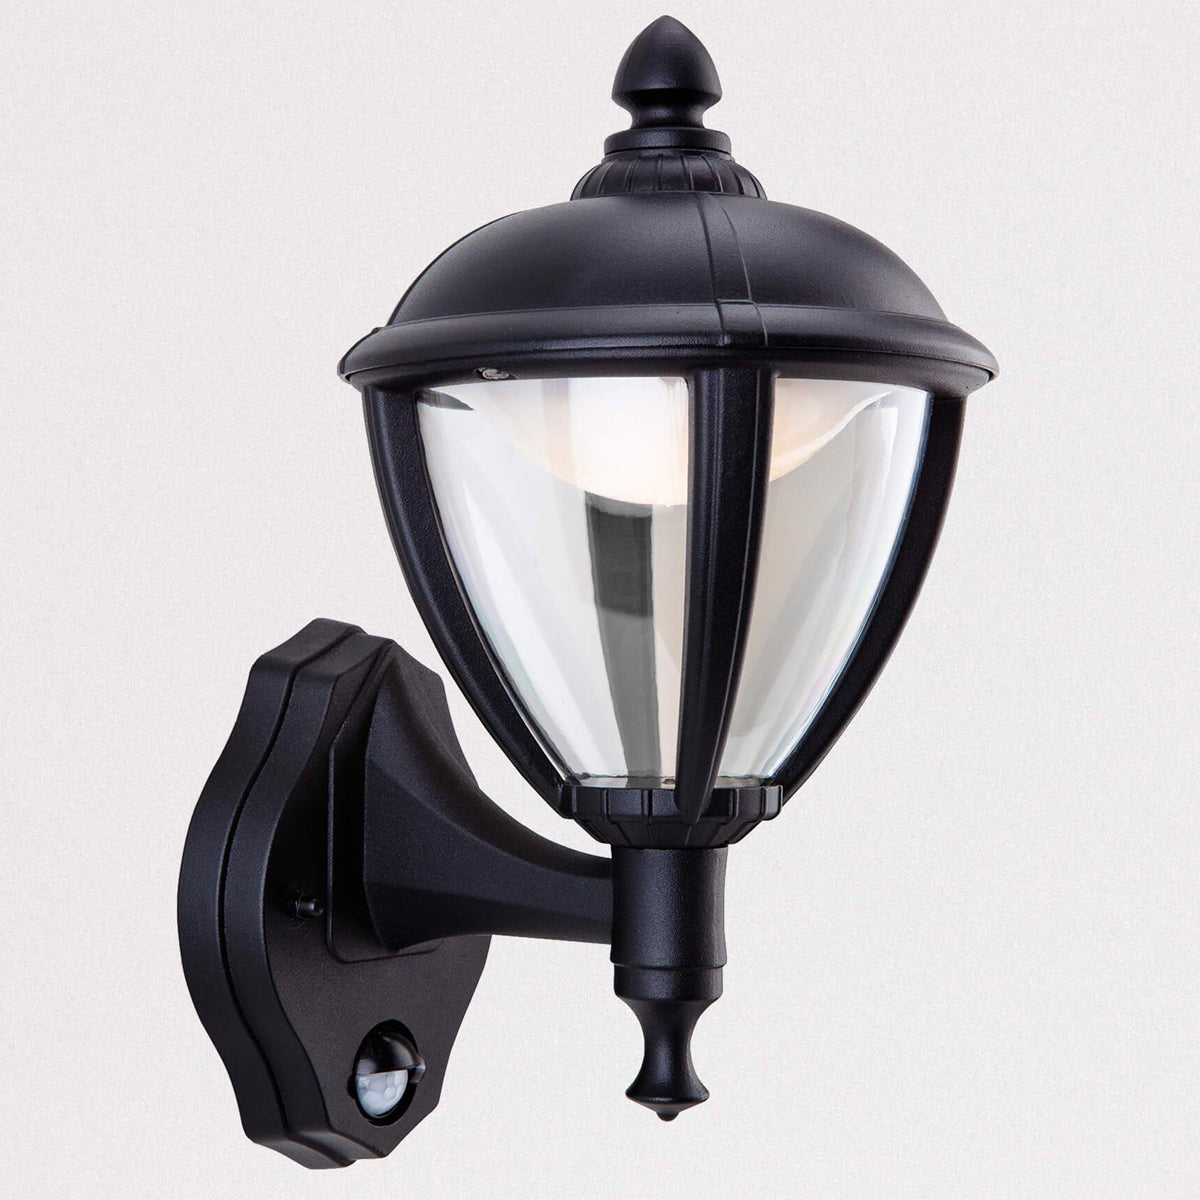 CGC CINDY Black With Motion Sensor Outdoor LED Wall Coach Lantern